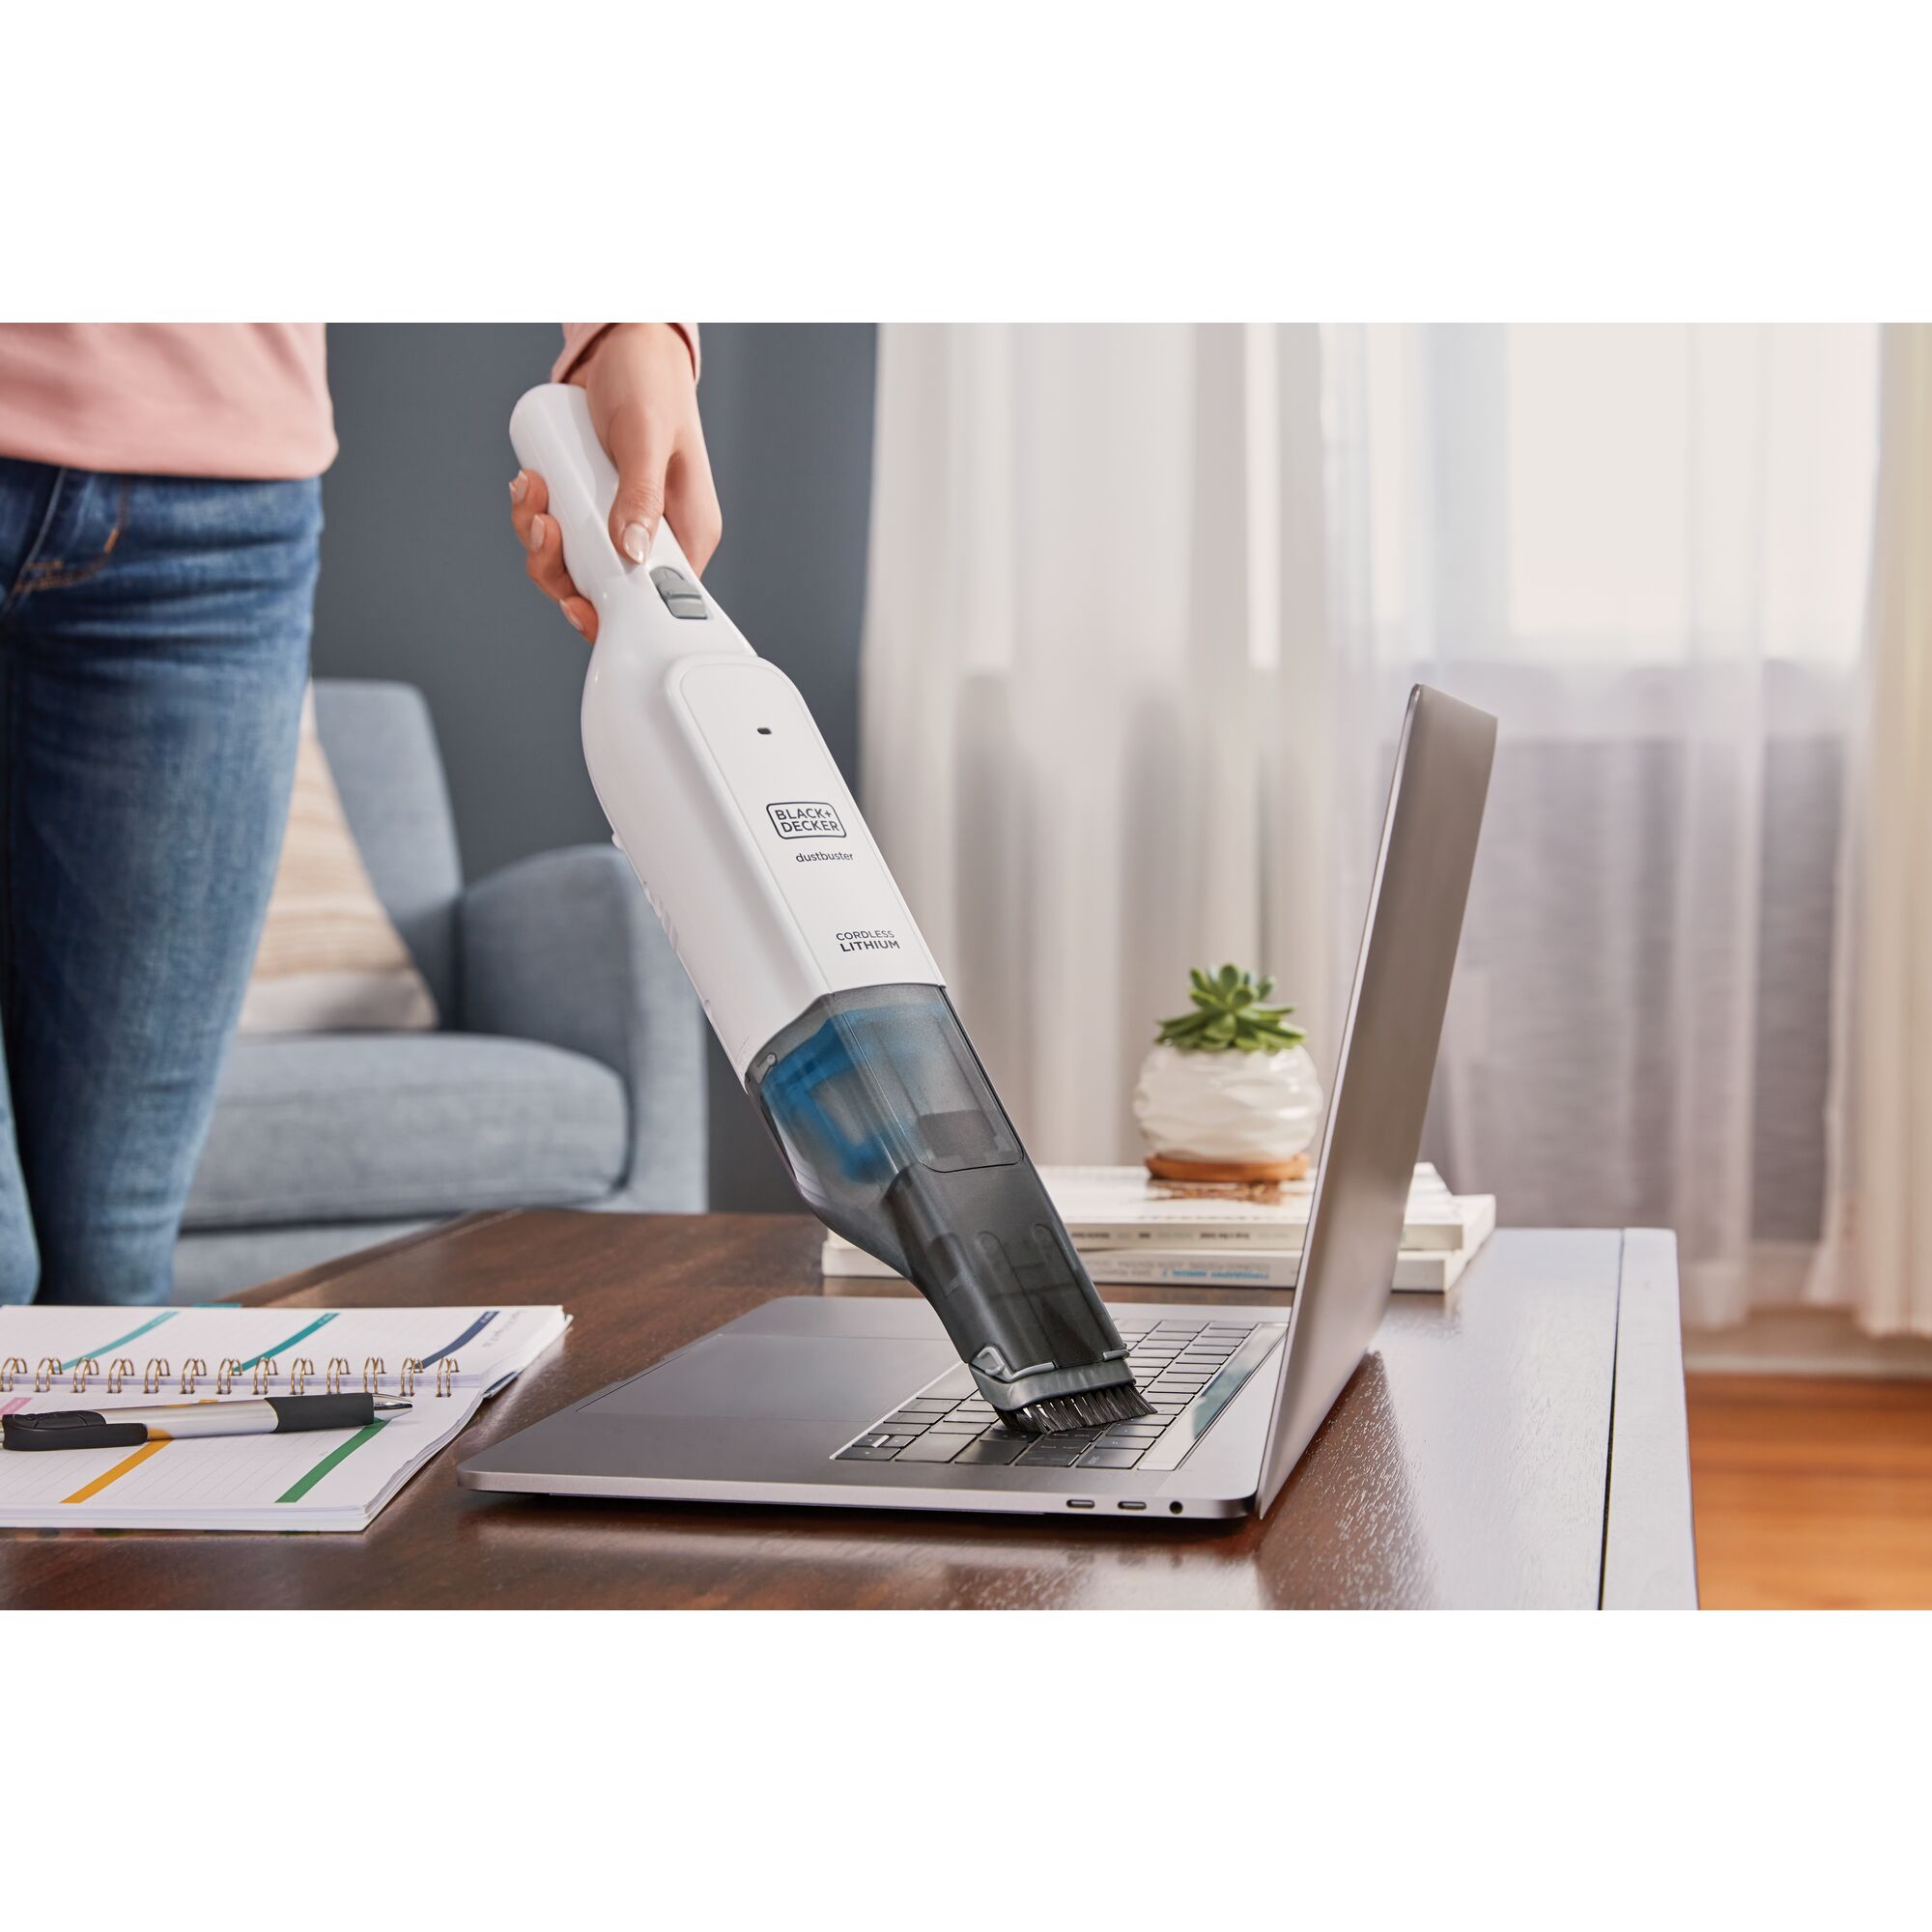 Dustbuster advanced clean slim cordless handheld vacuum cleaning laptop.